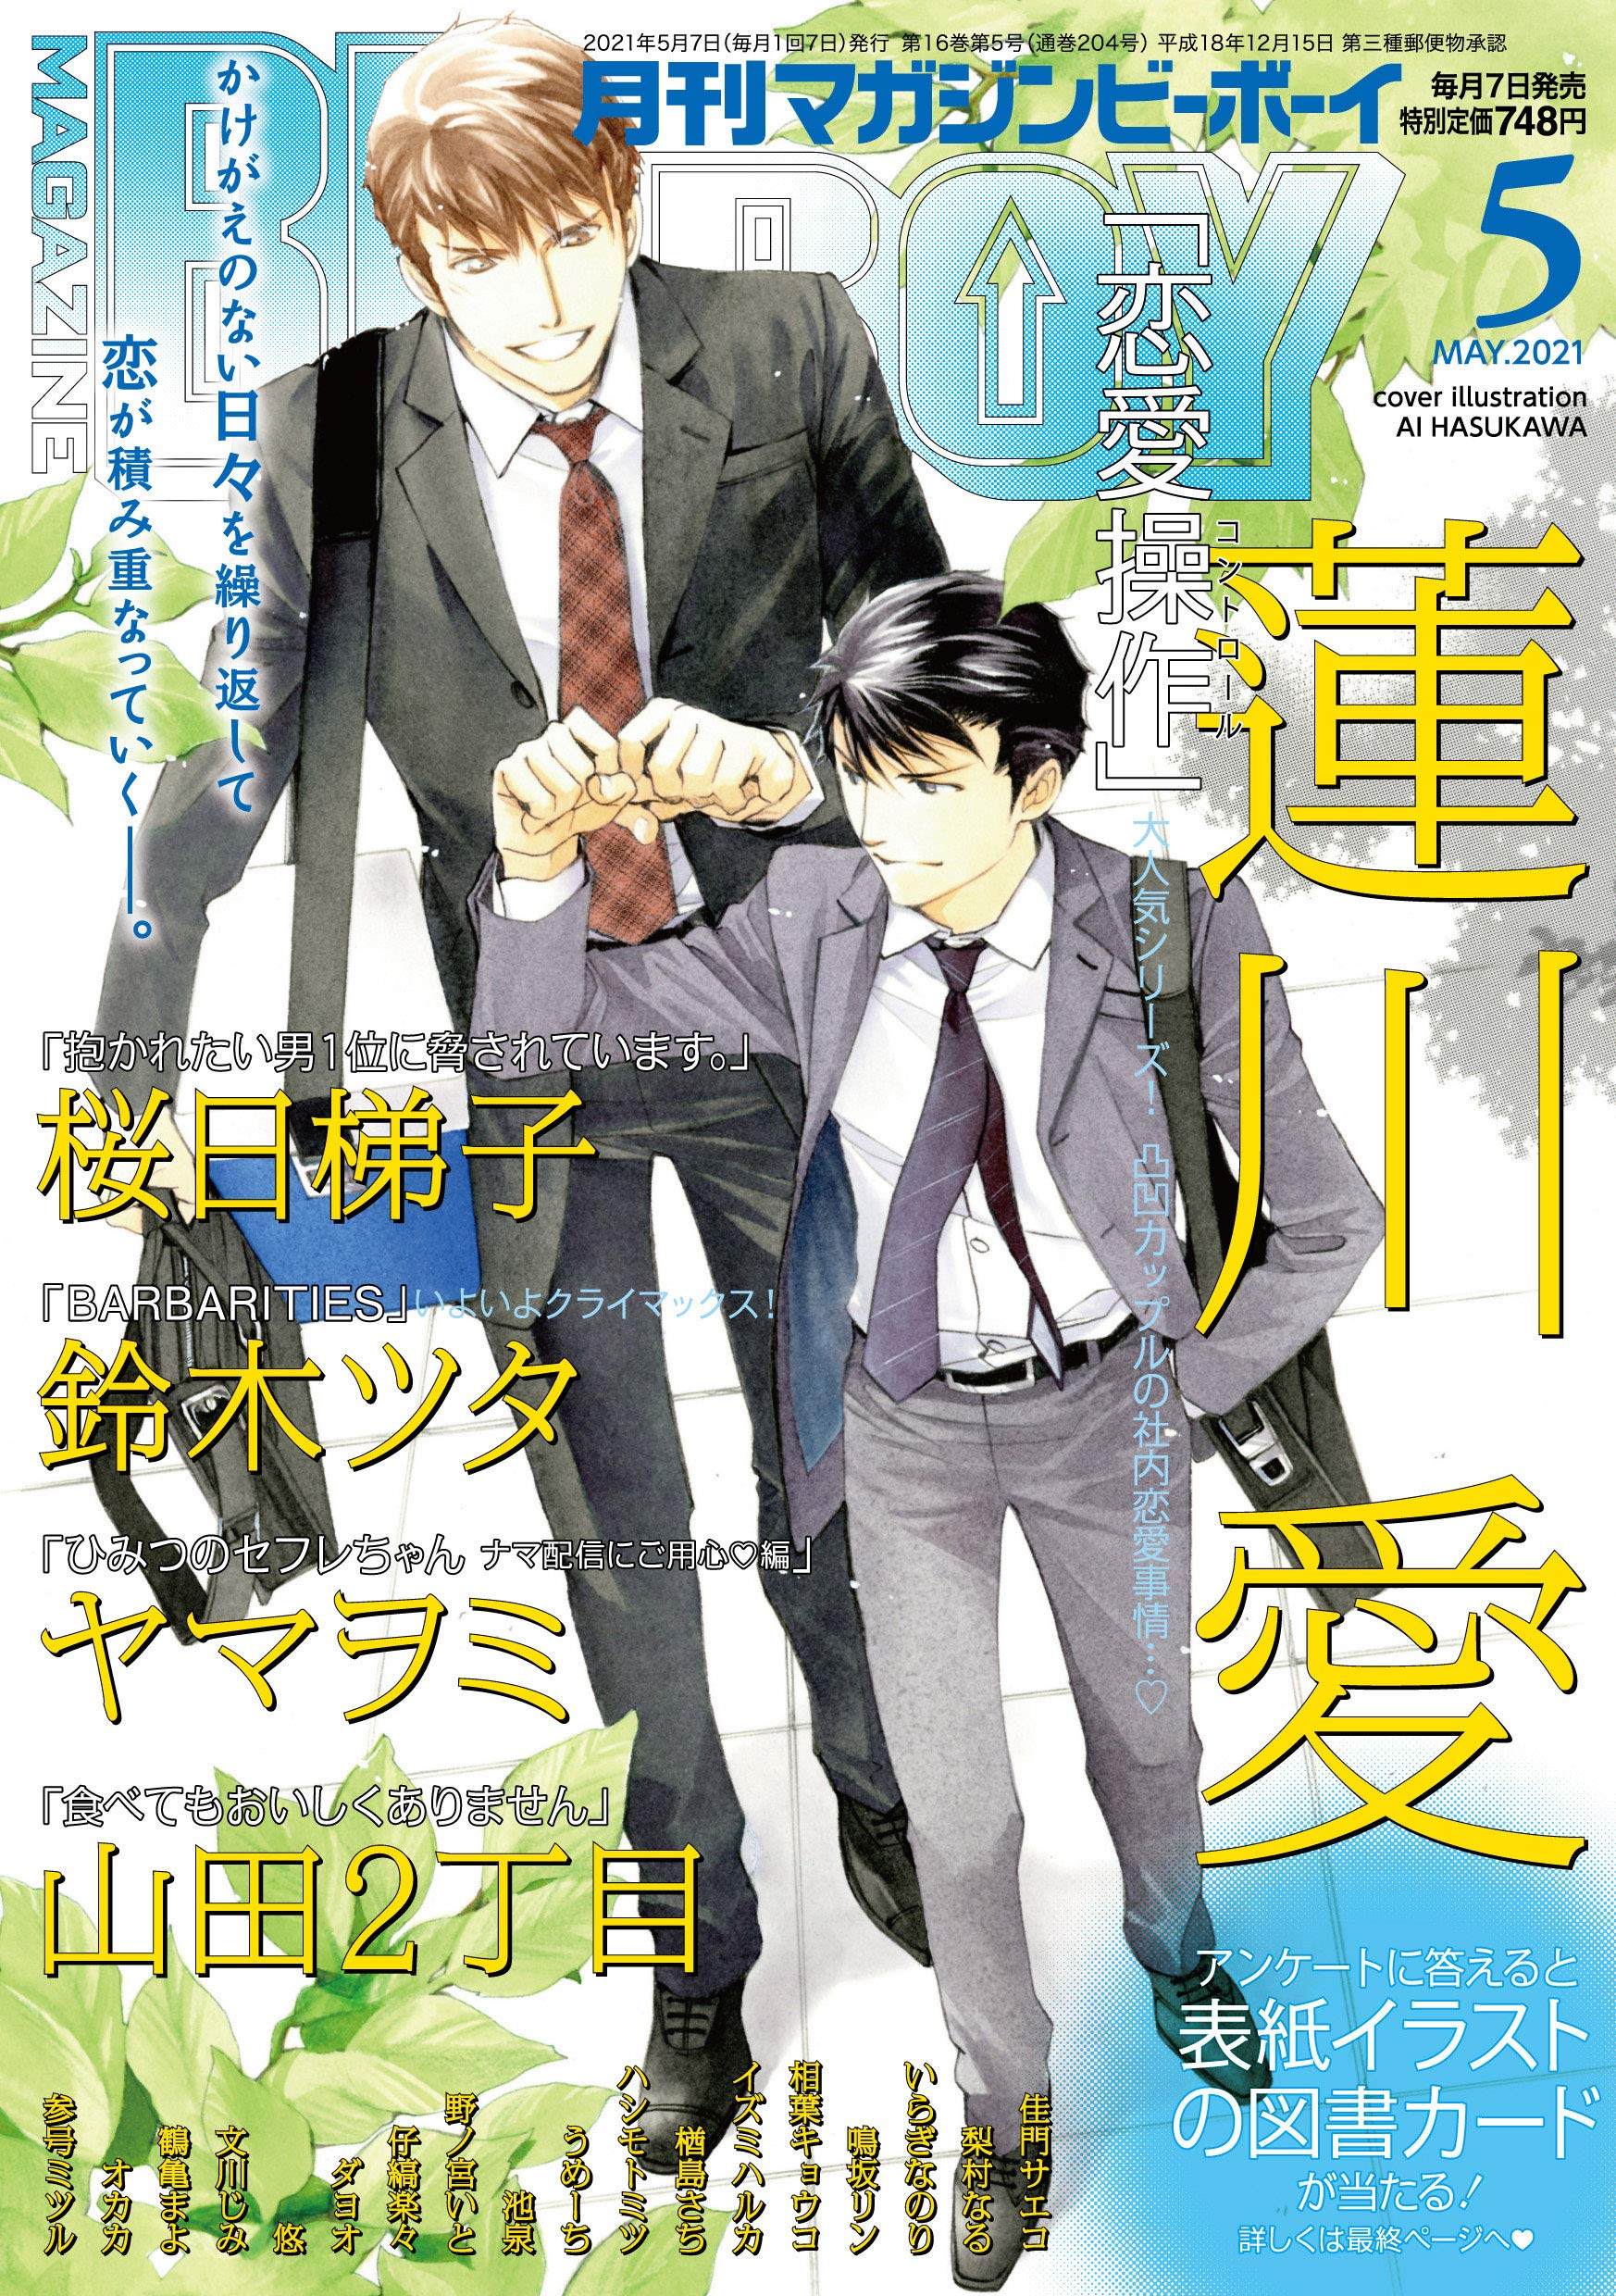 Boys Love (Yaoi) Comics - B-boy COMICS (MAGAZINE BE×BOY(マガジンビーボーイ) 2021年05月号[雑誌]) / Suzuki Tsuta & Sakurabi Hashigo & 悠 & オカカ & Hasukawa Ai